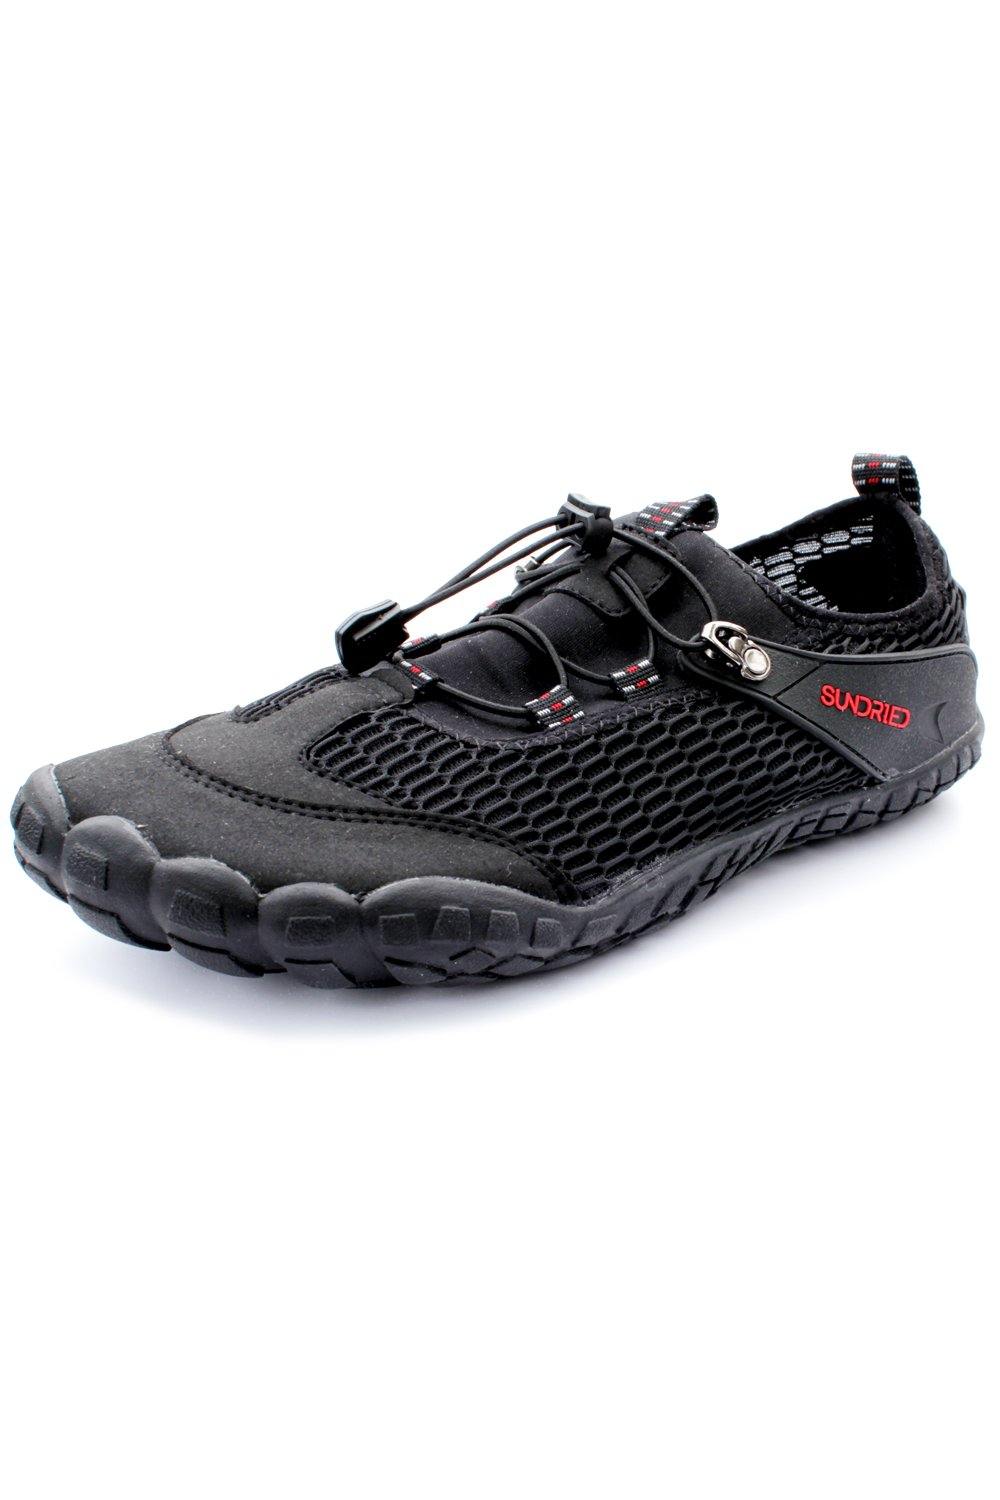 Sundried Men's Barefoot Shoes 2.5 Shoes UK 6 Black SD0306 6UK Black Activewear